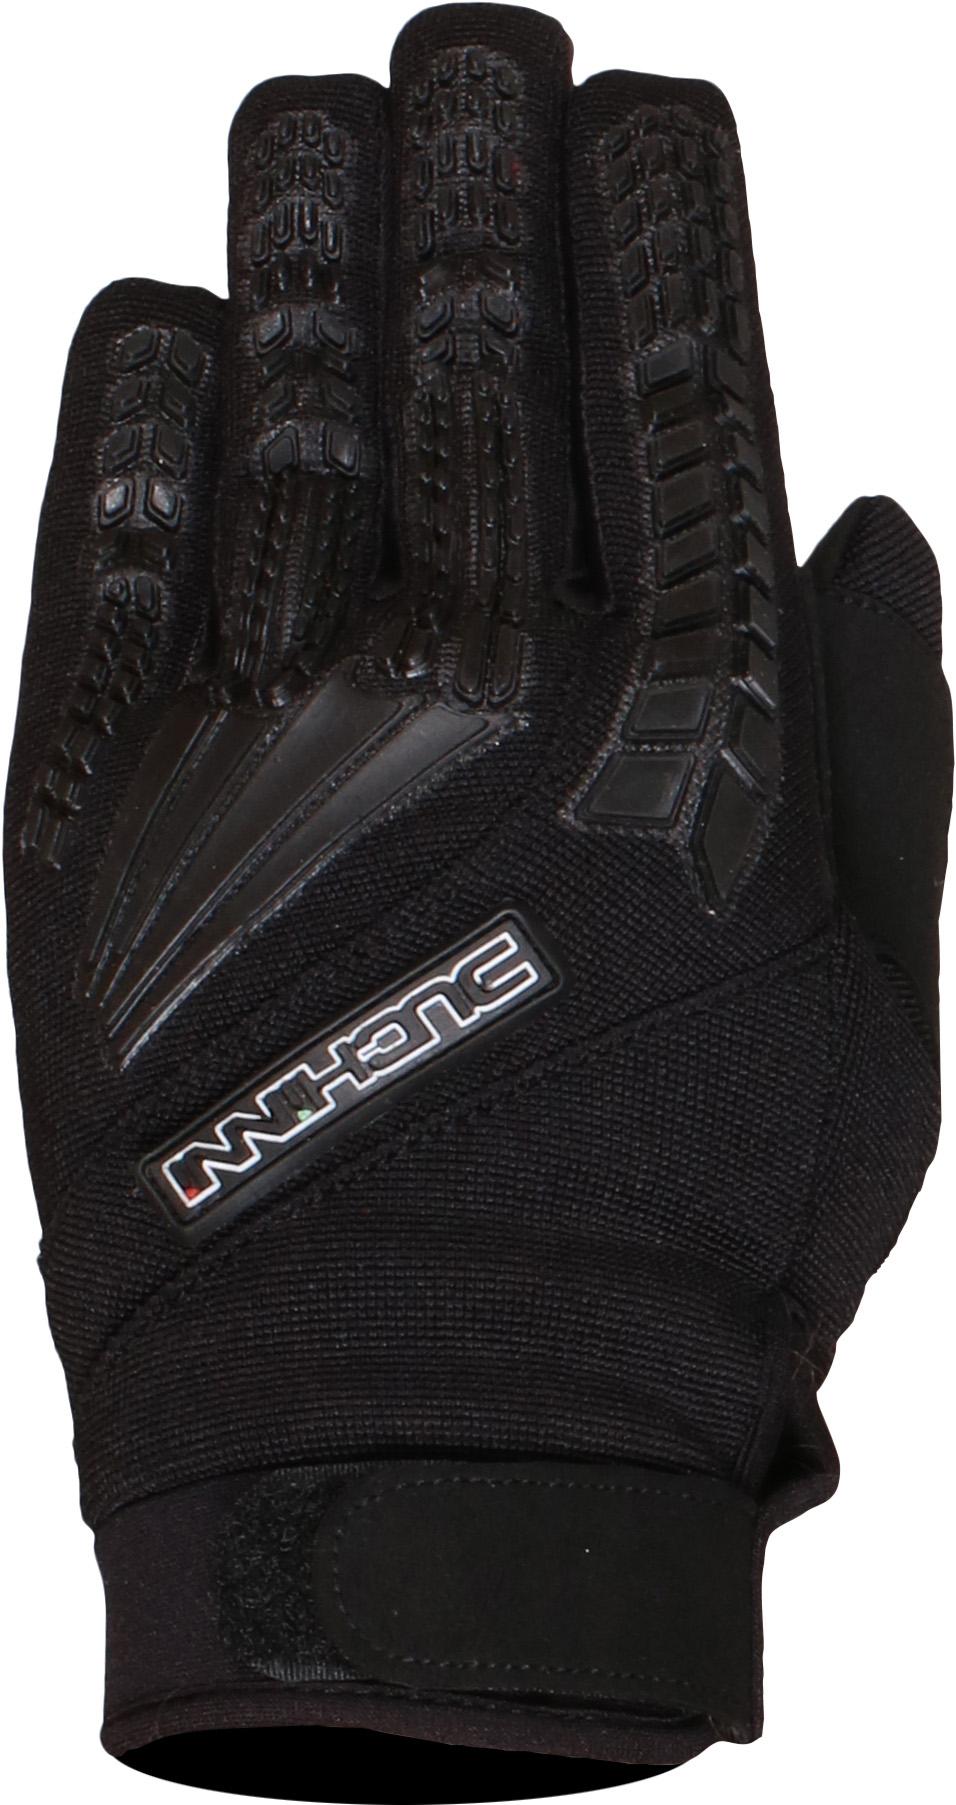 Duchinni Focus Motorcycle Gloves - Black, Xl